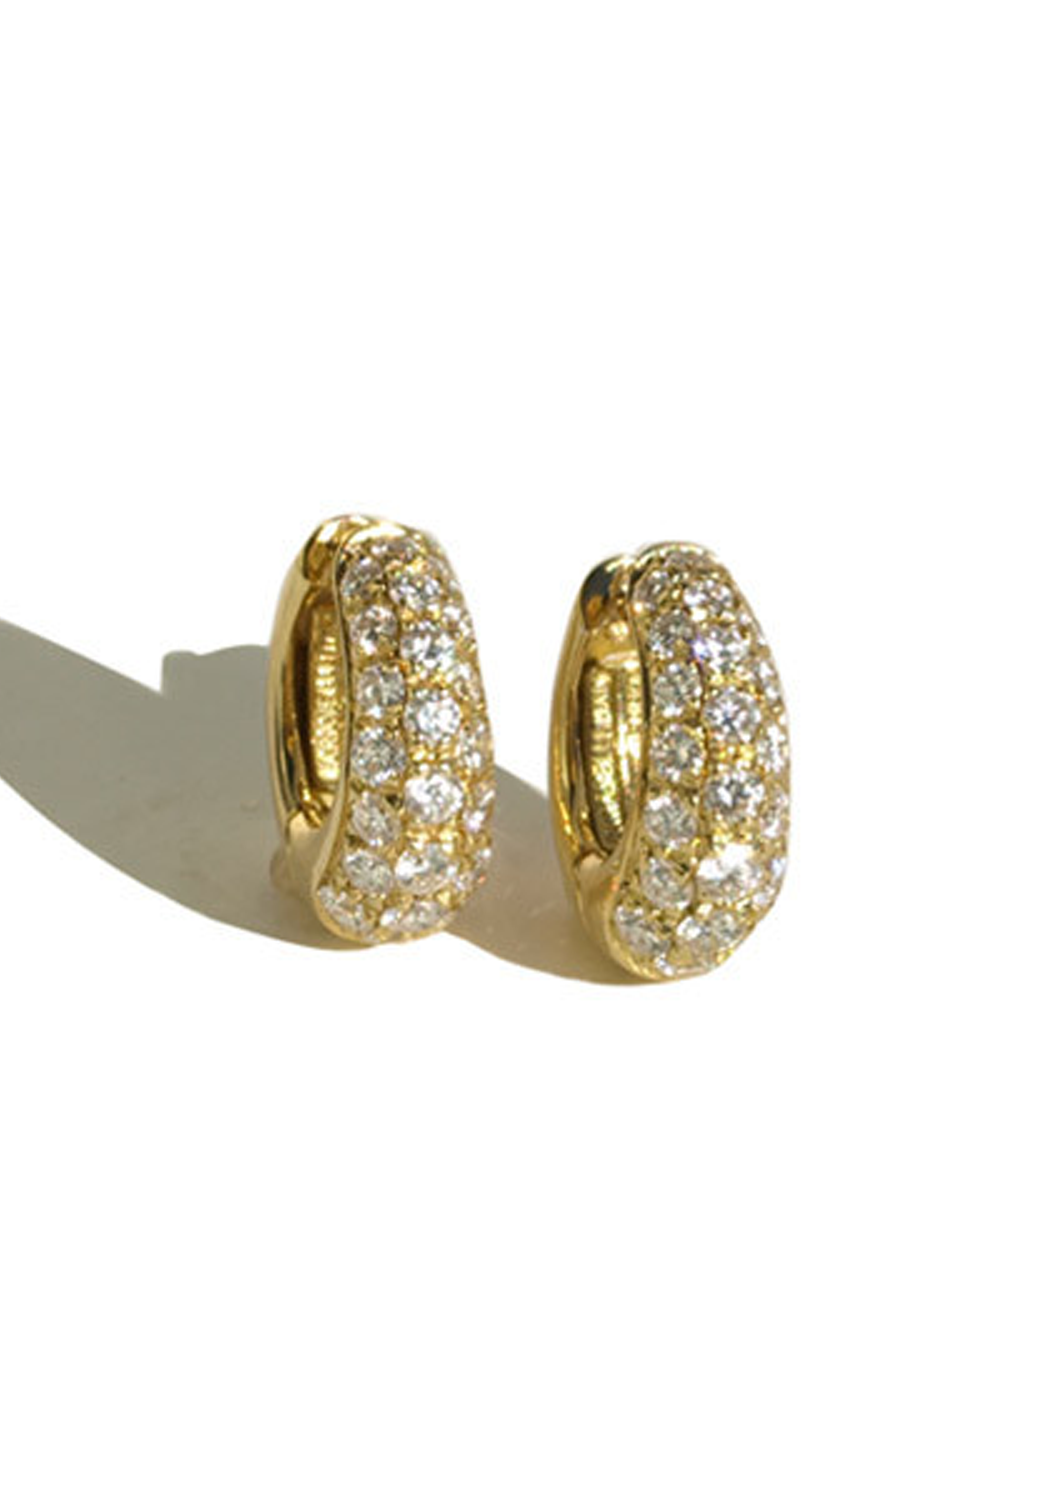 Garavelli 18k Yellow Gold Diamond Huggie Earrings | OsterJewelers.com